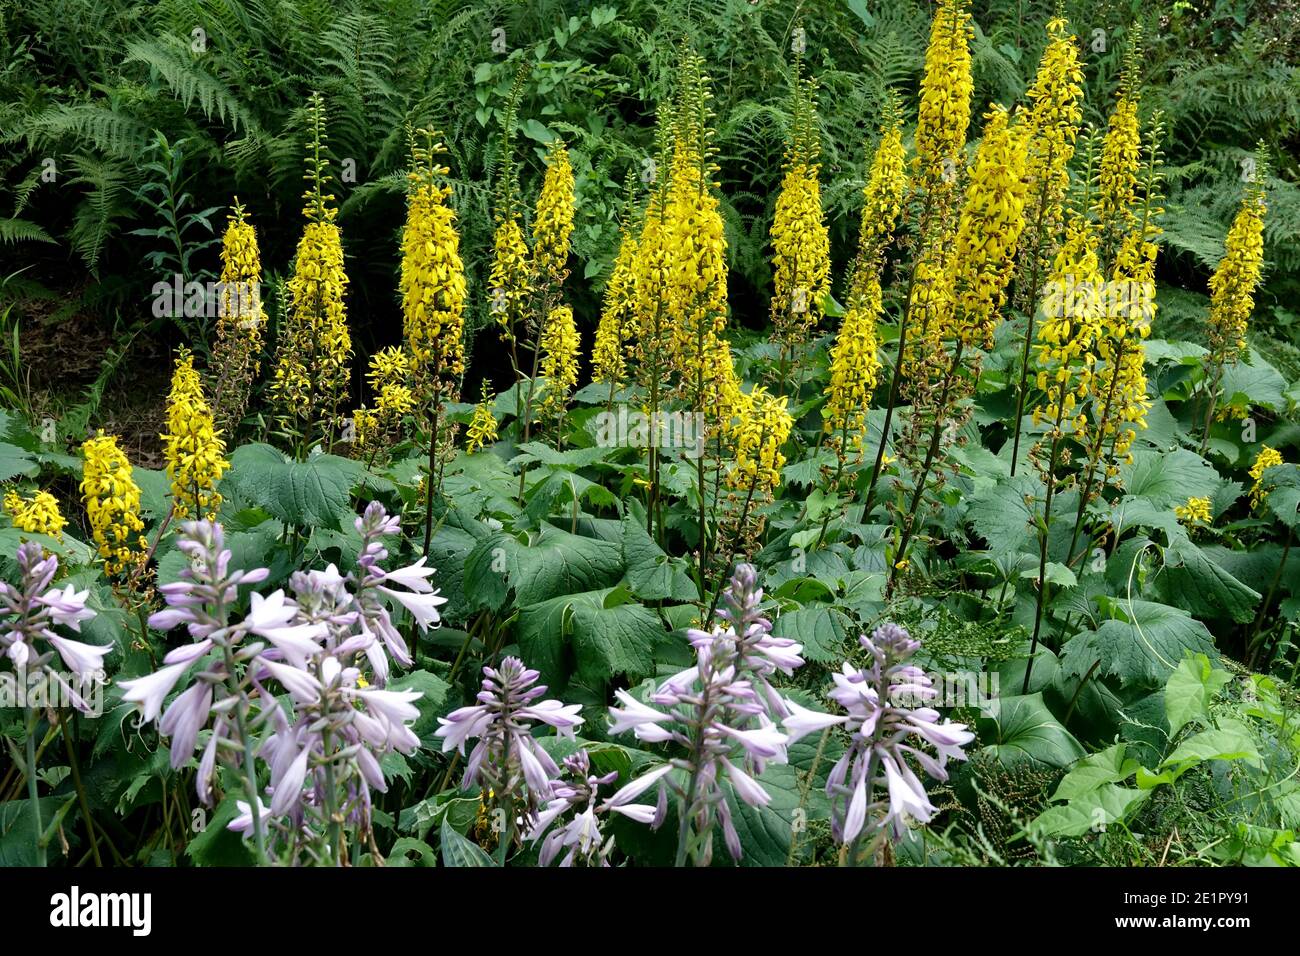 Herbaceous border plants in garden Hosta Ligularia hardy perennials Stock Photo